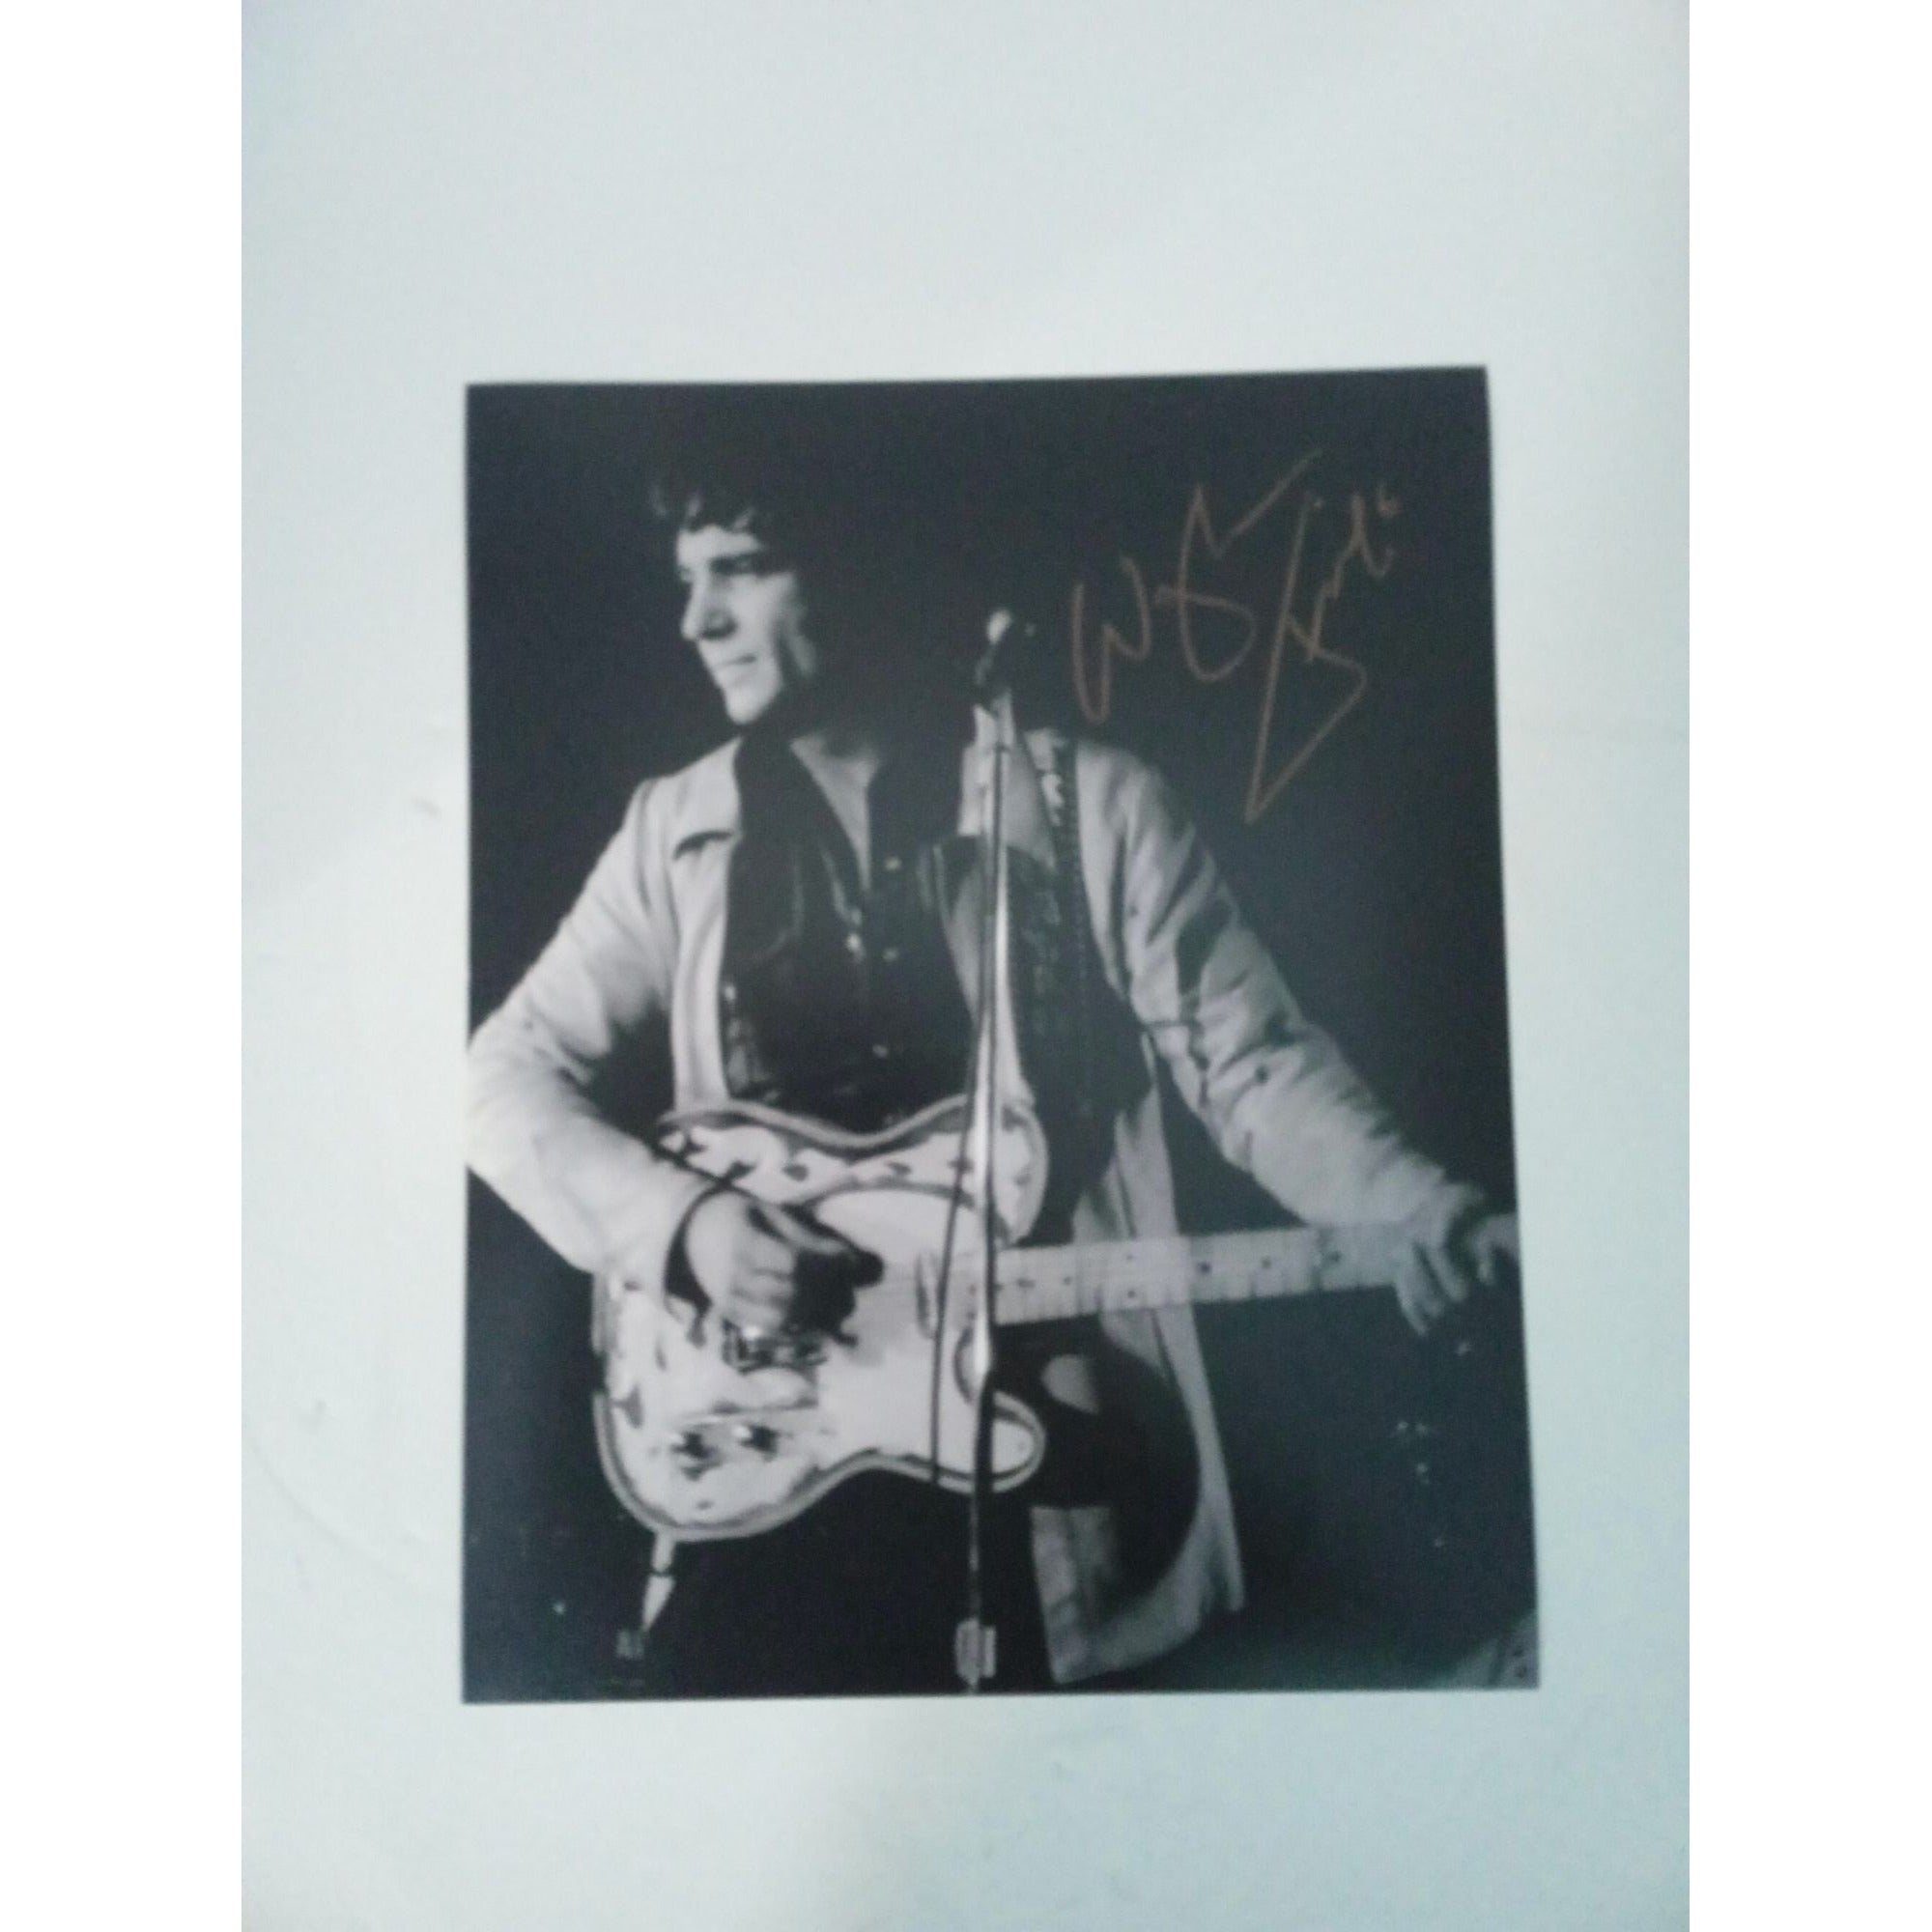 Waylon Jennings 8x10 signed photo with proof